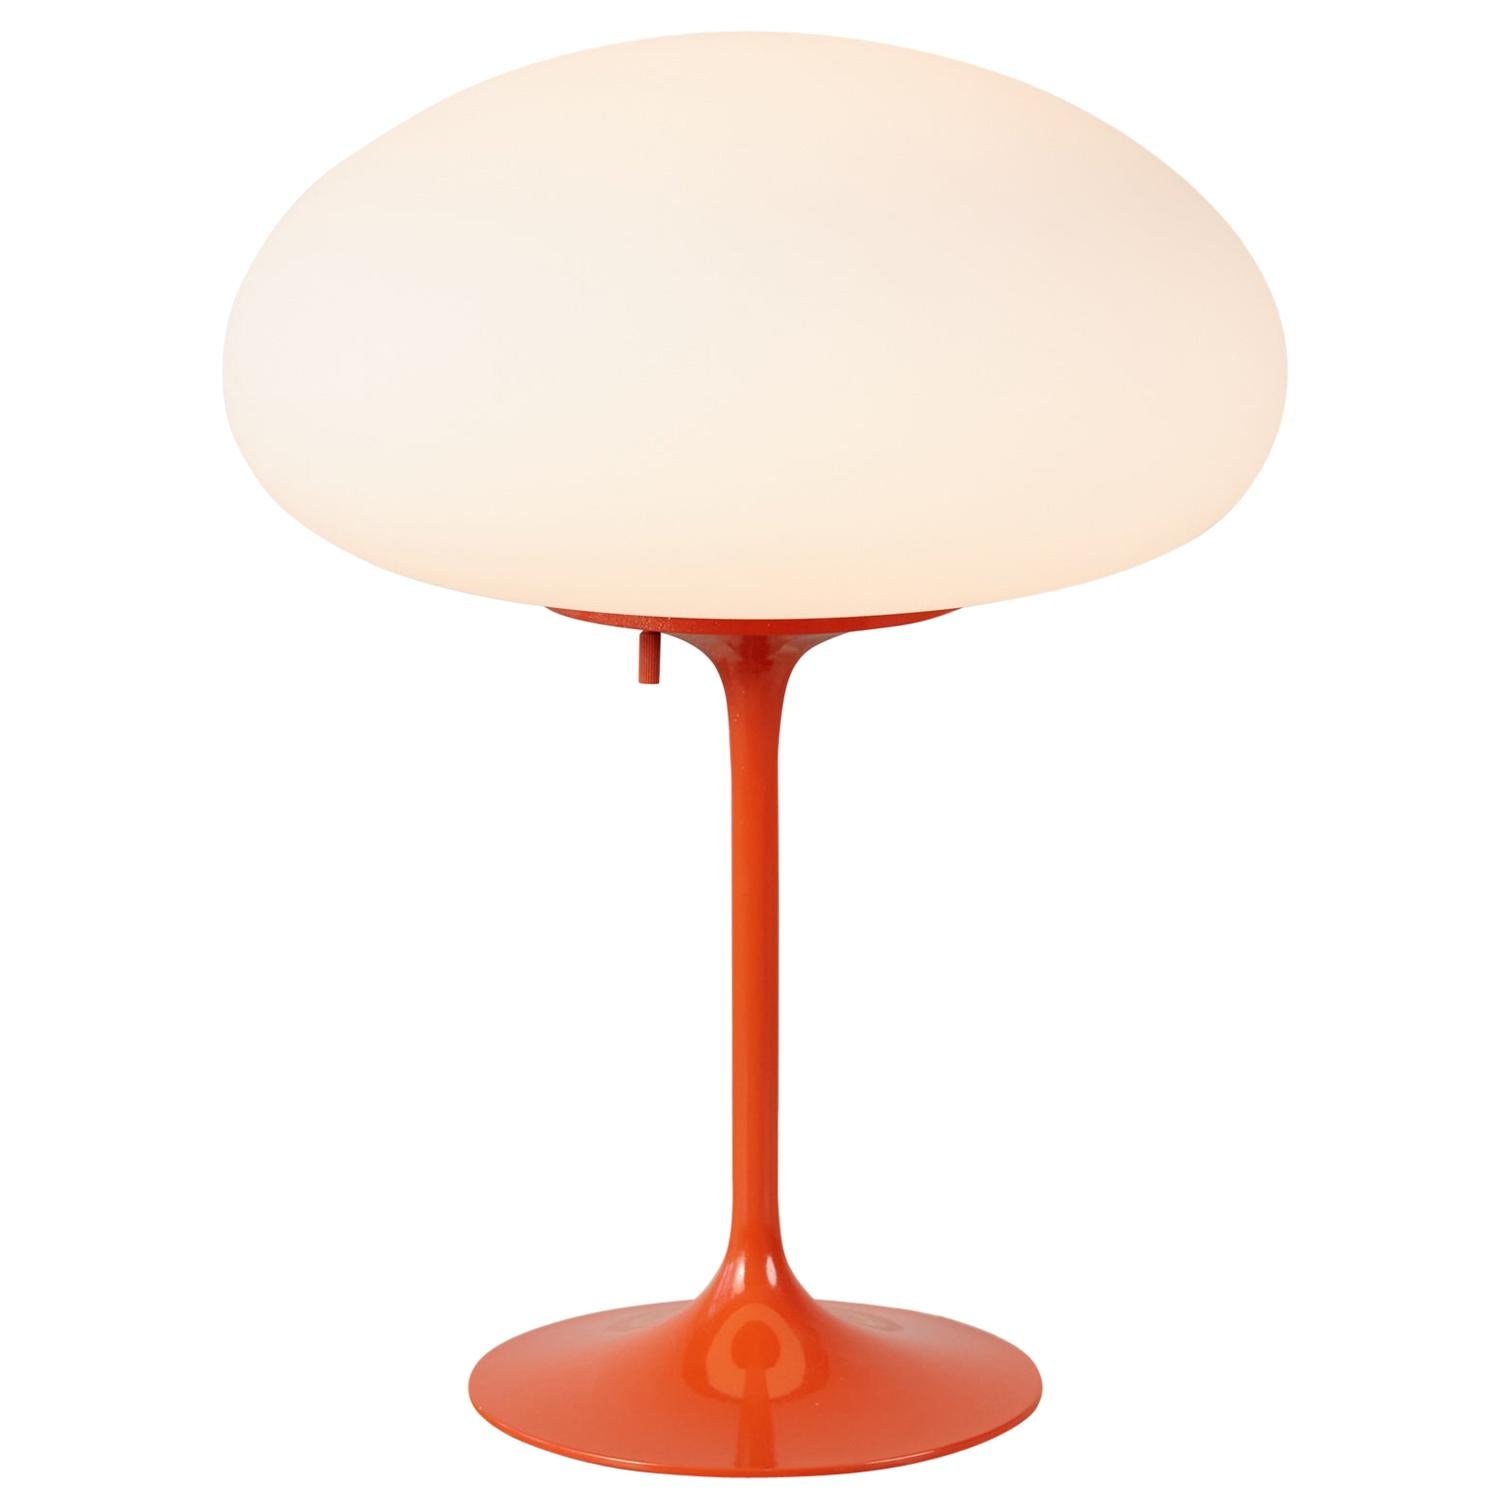 Bill Curry “Mushroom” Table Lamp